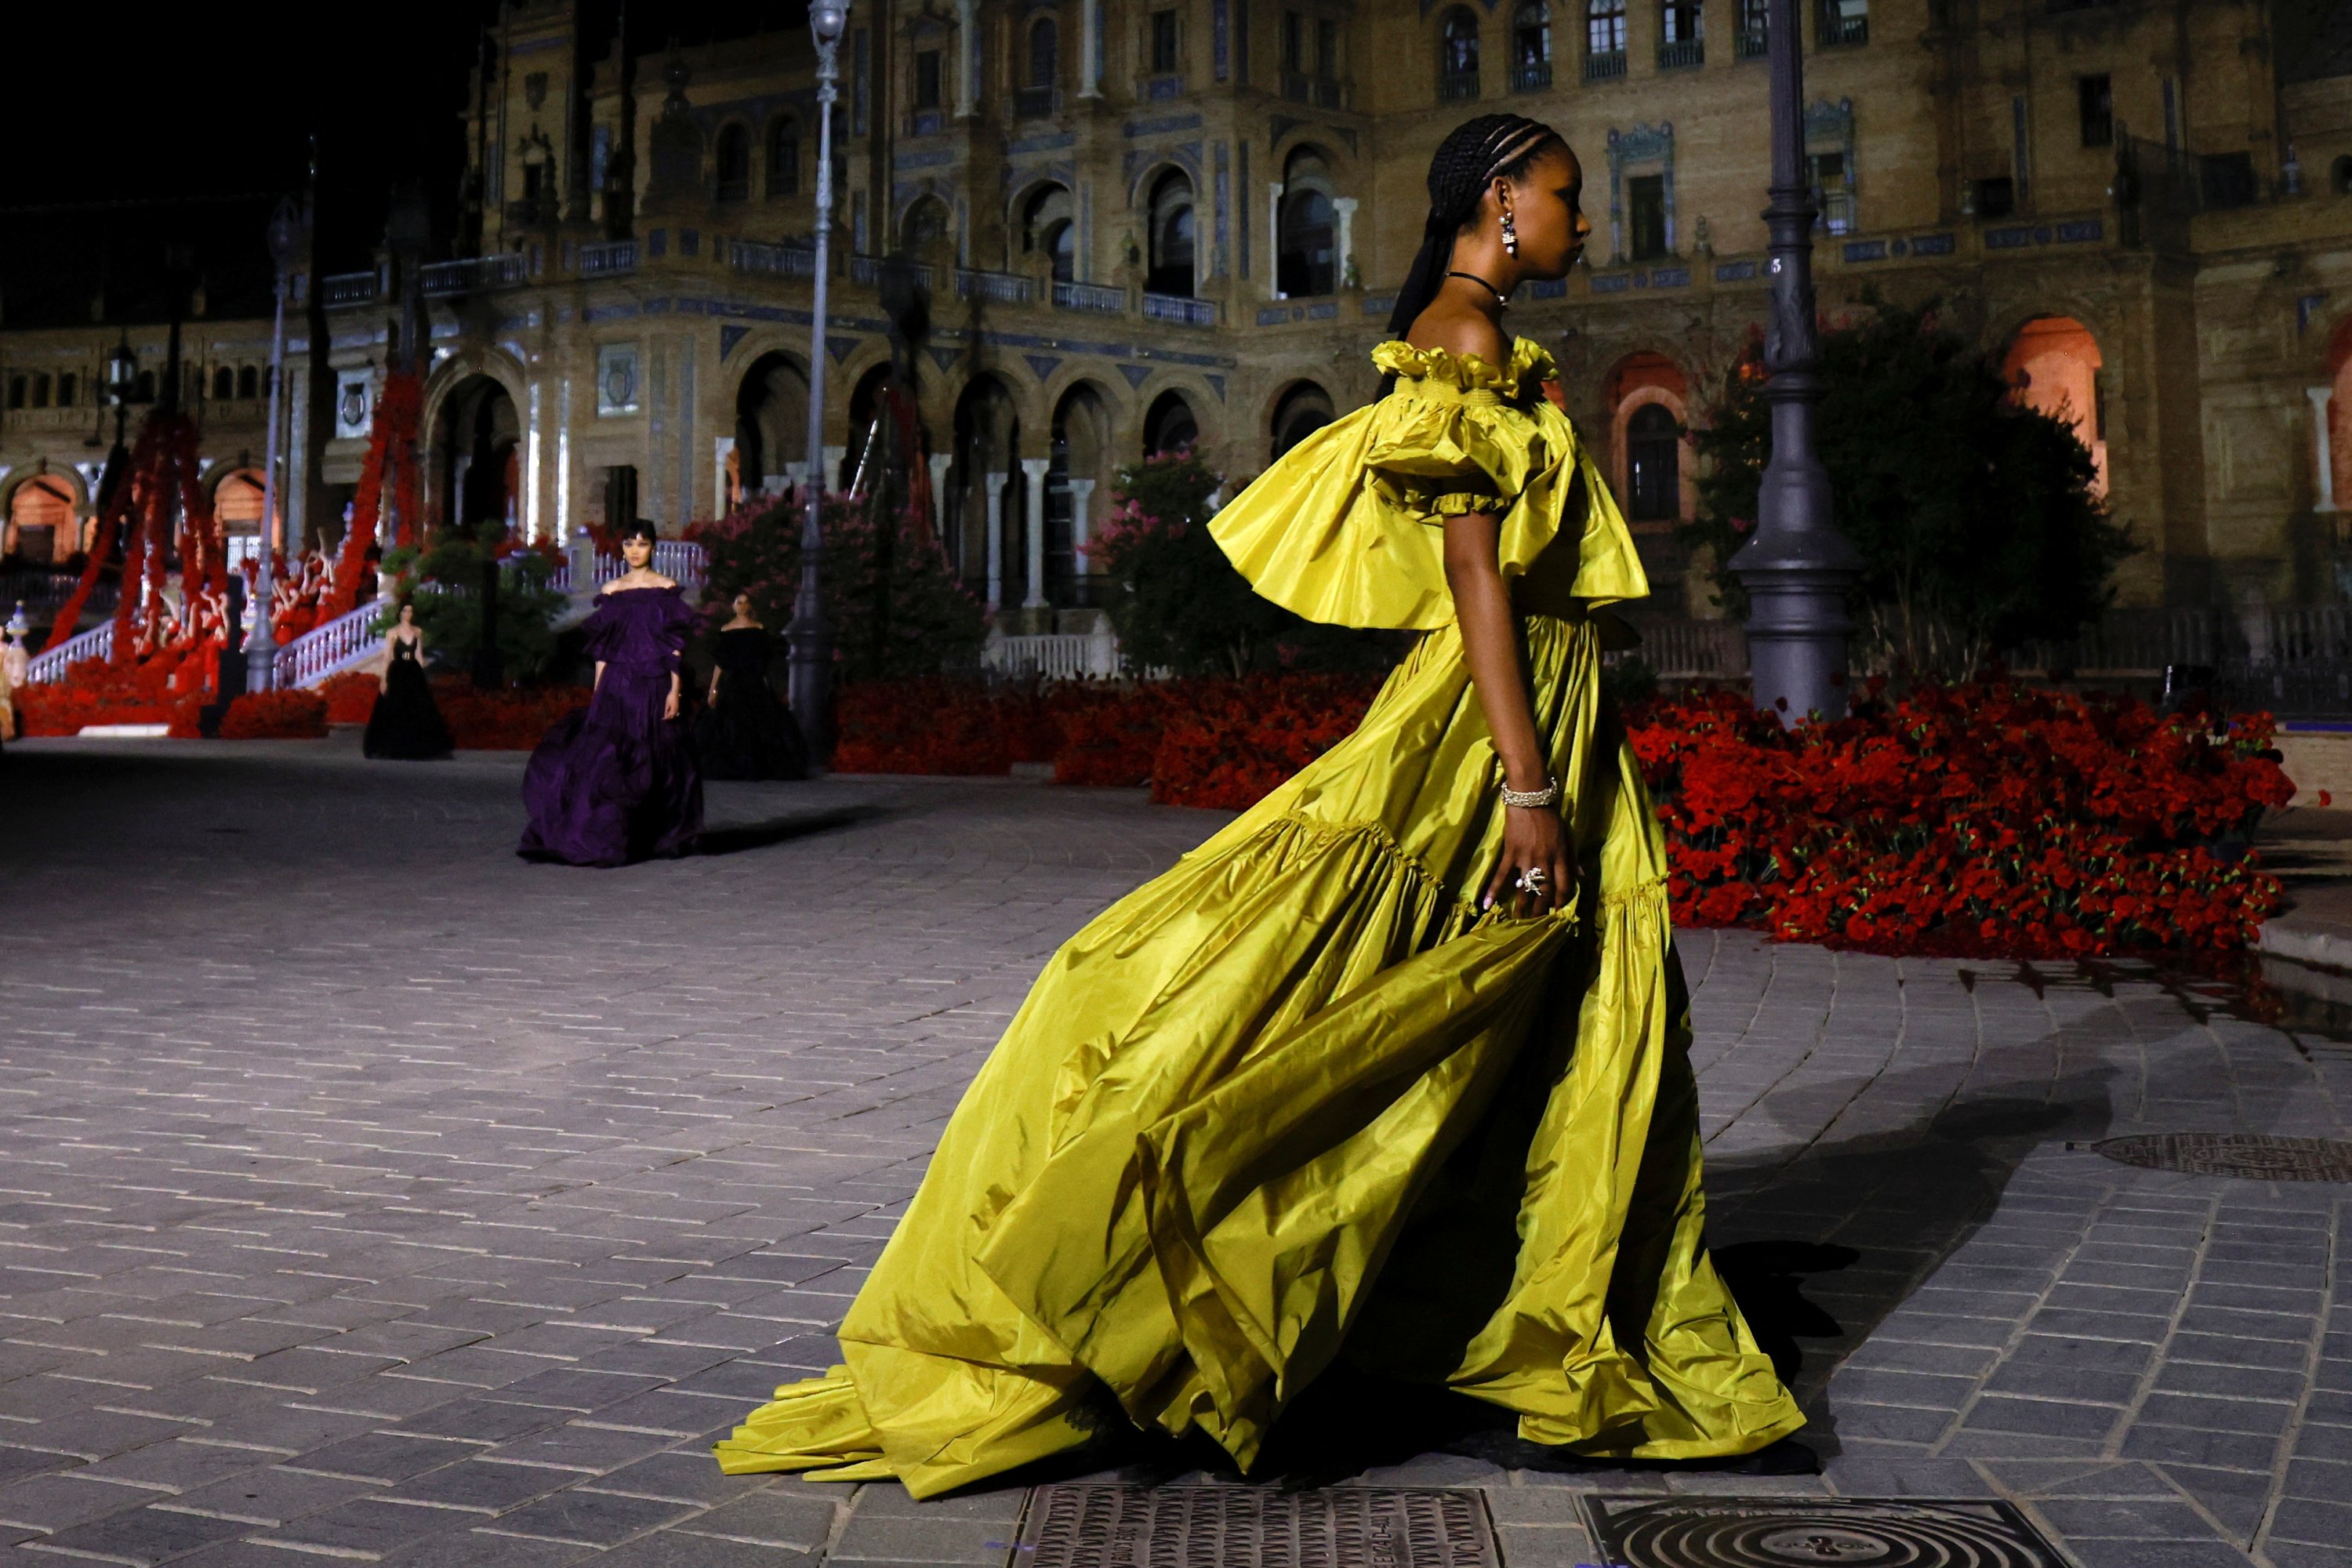 Model memamerkan pakaian Christian Dior selama acara pelayaran untuk mengungkap koleksi 2023, di Seville, Spanyol, 16 Juni 2022. (Foto Reuters)